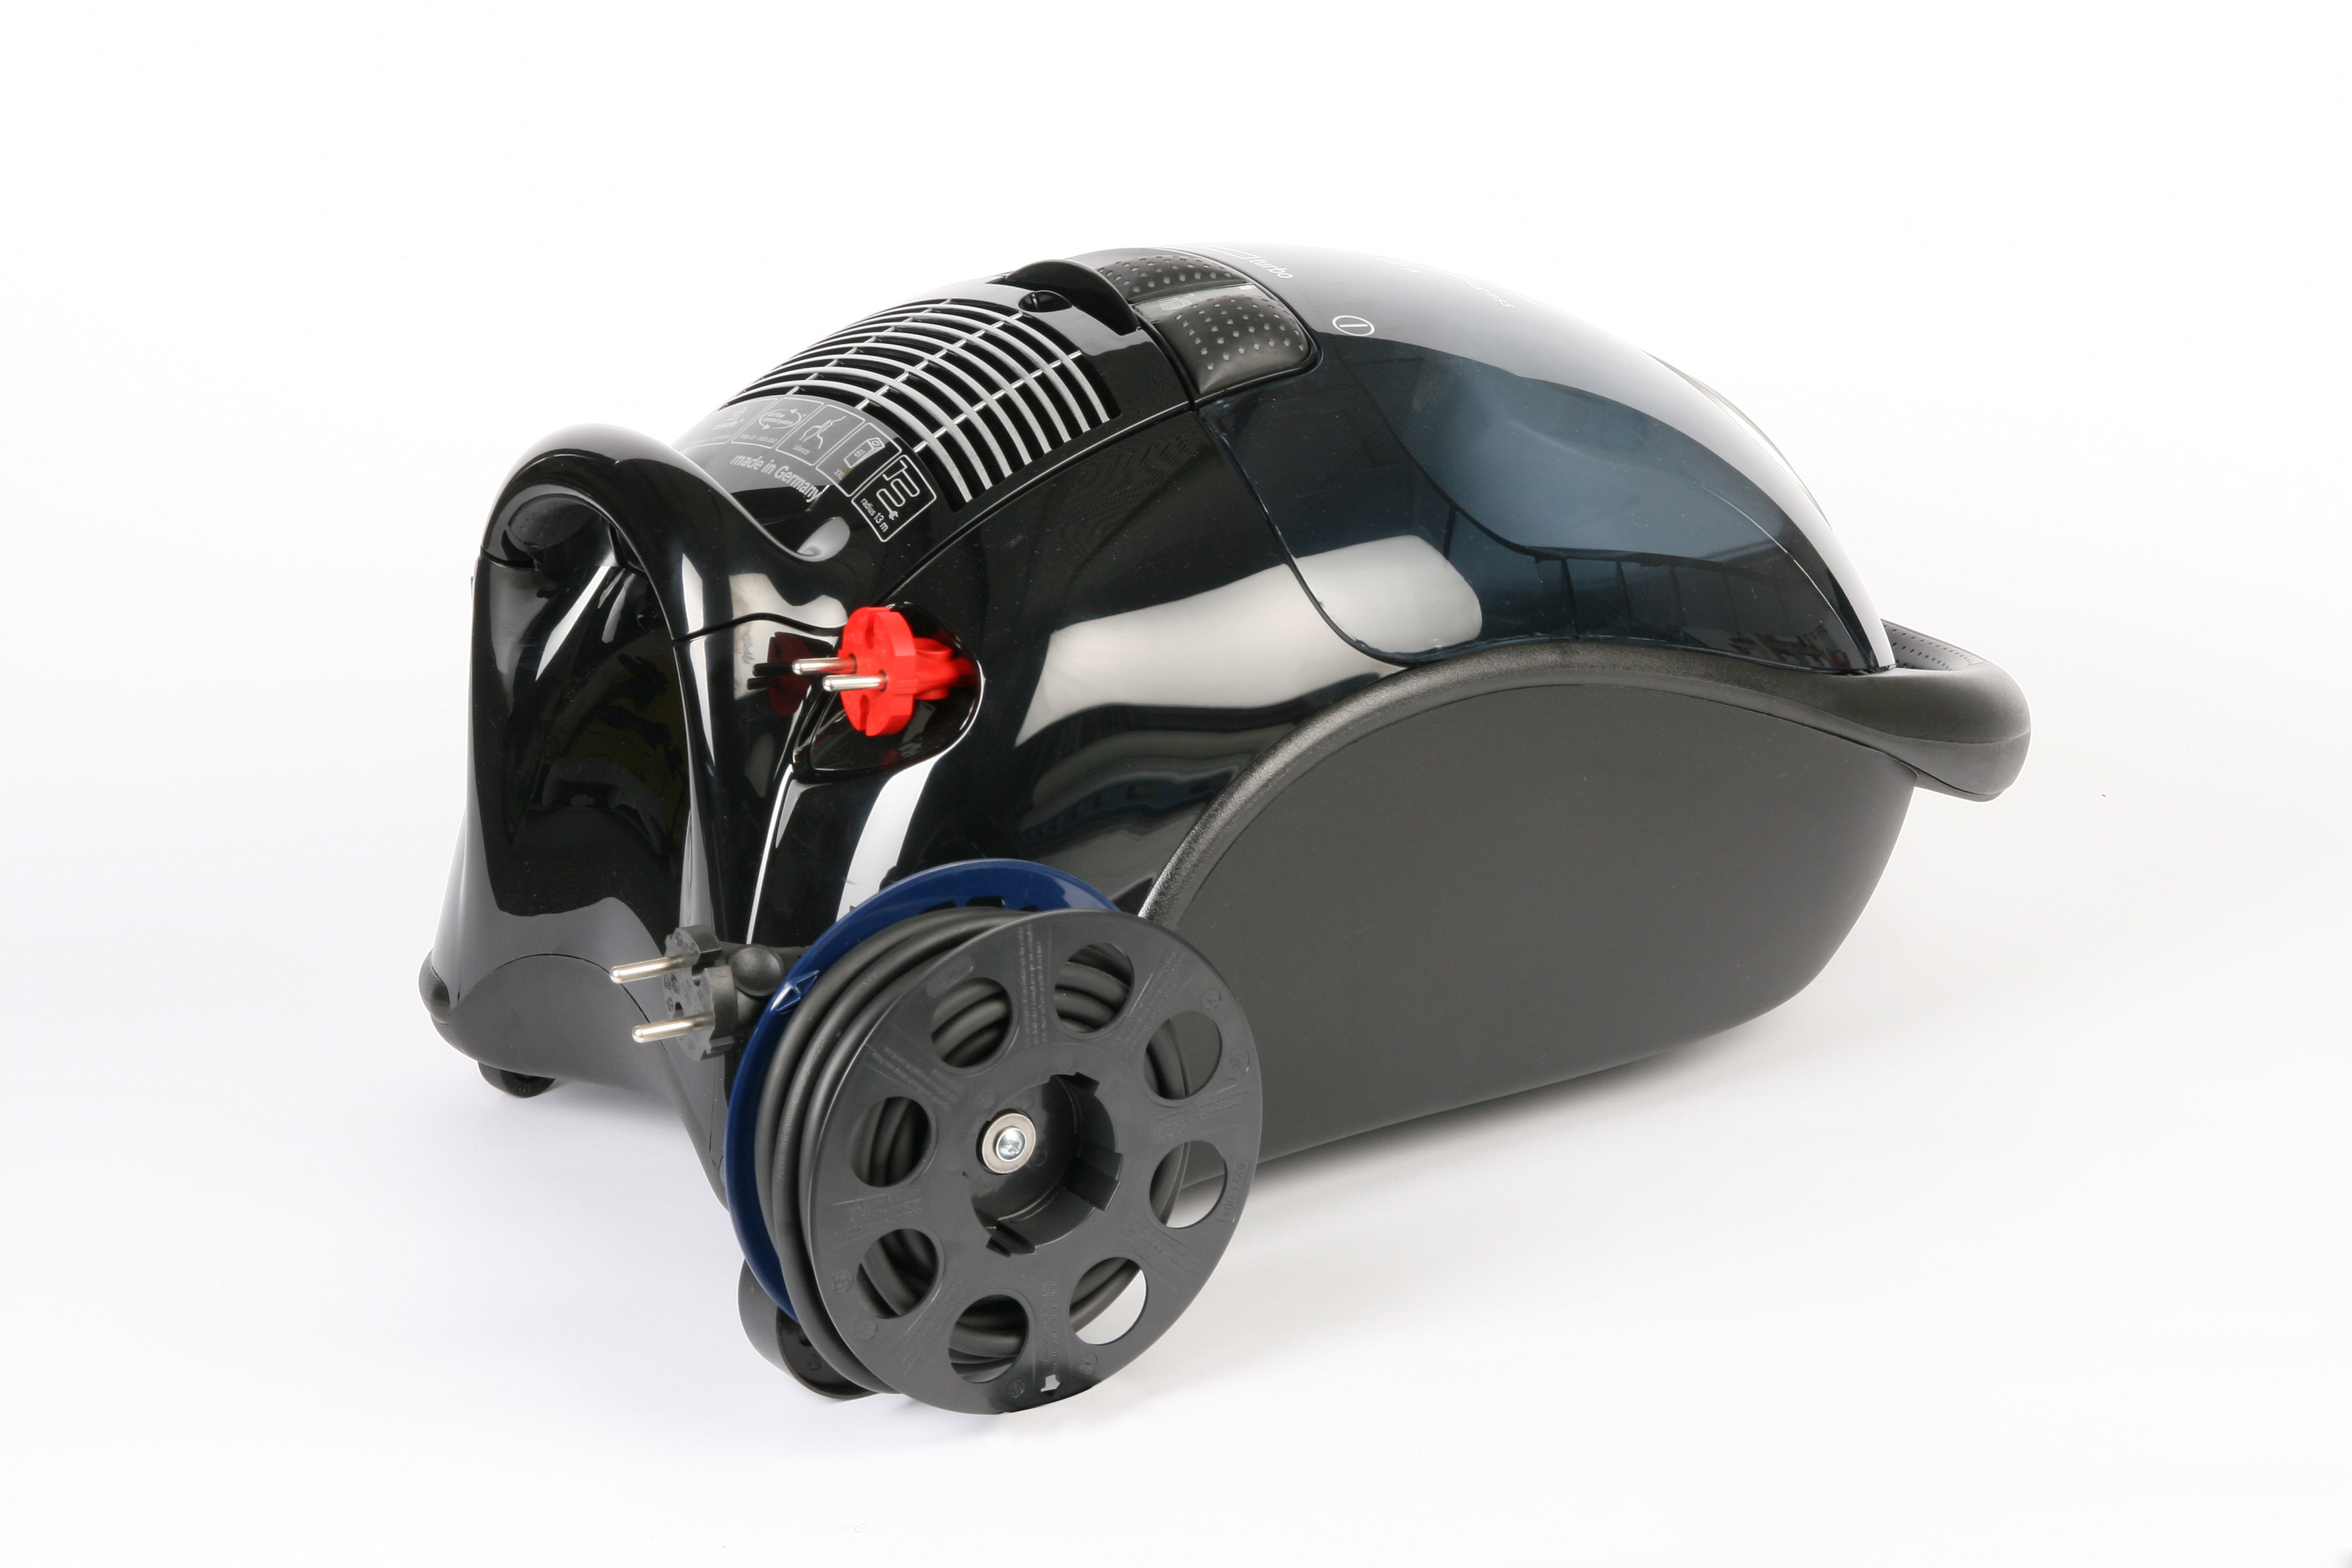 The ATHOS cable rewinder in the vacuum cleaner : ATHOS